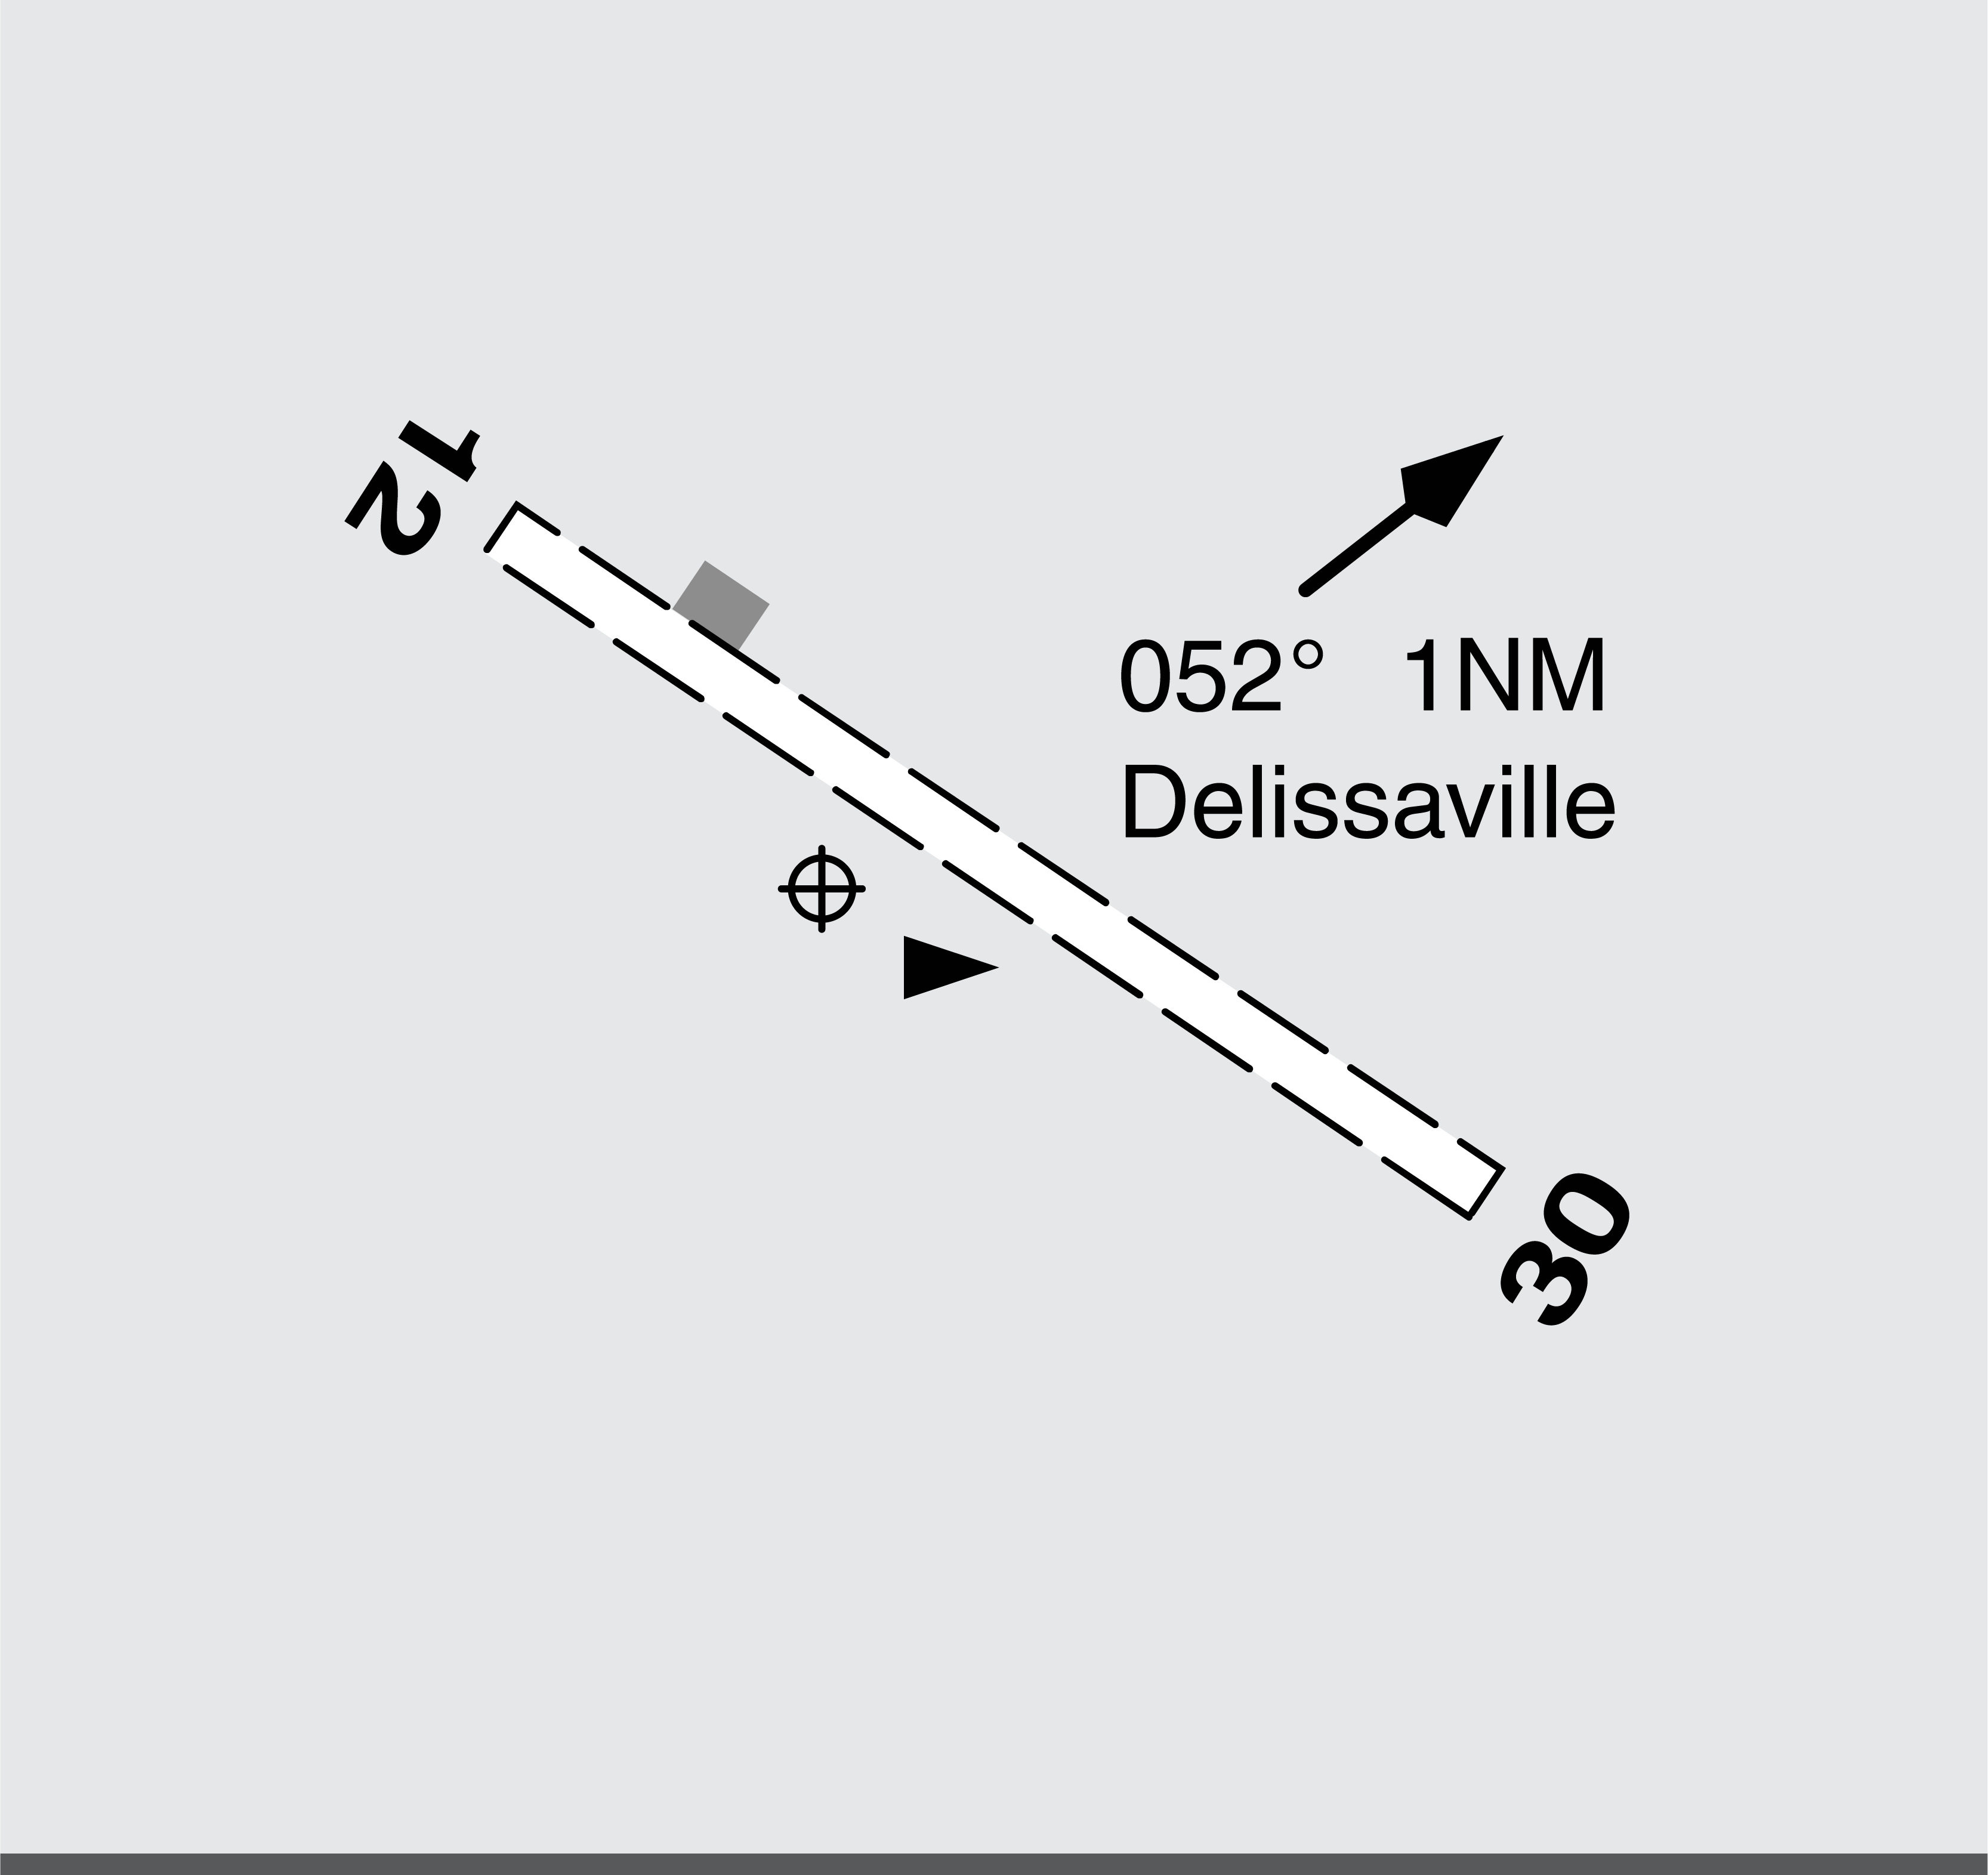 Runway diagram of Delissaville aerodrome